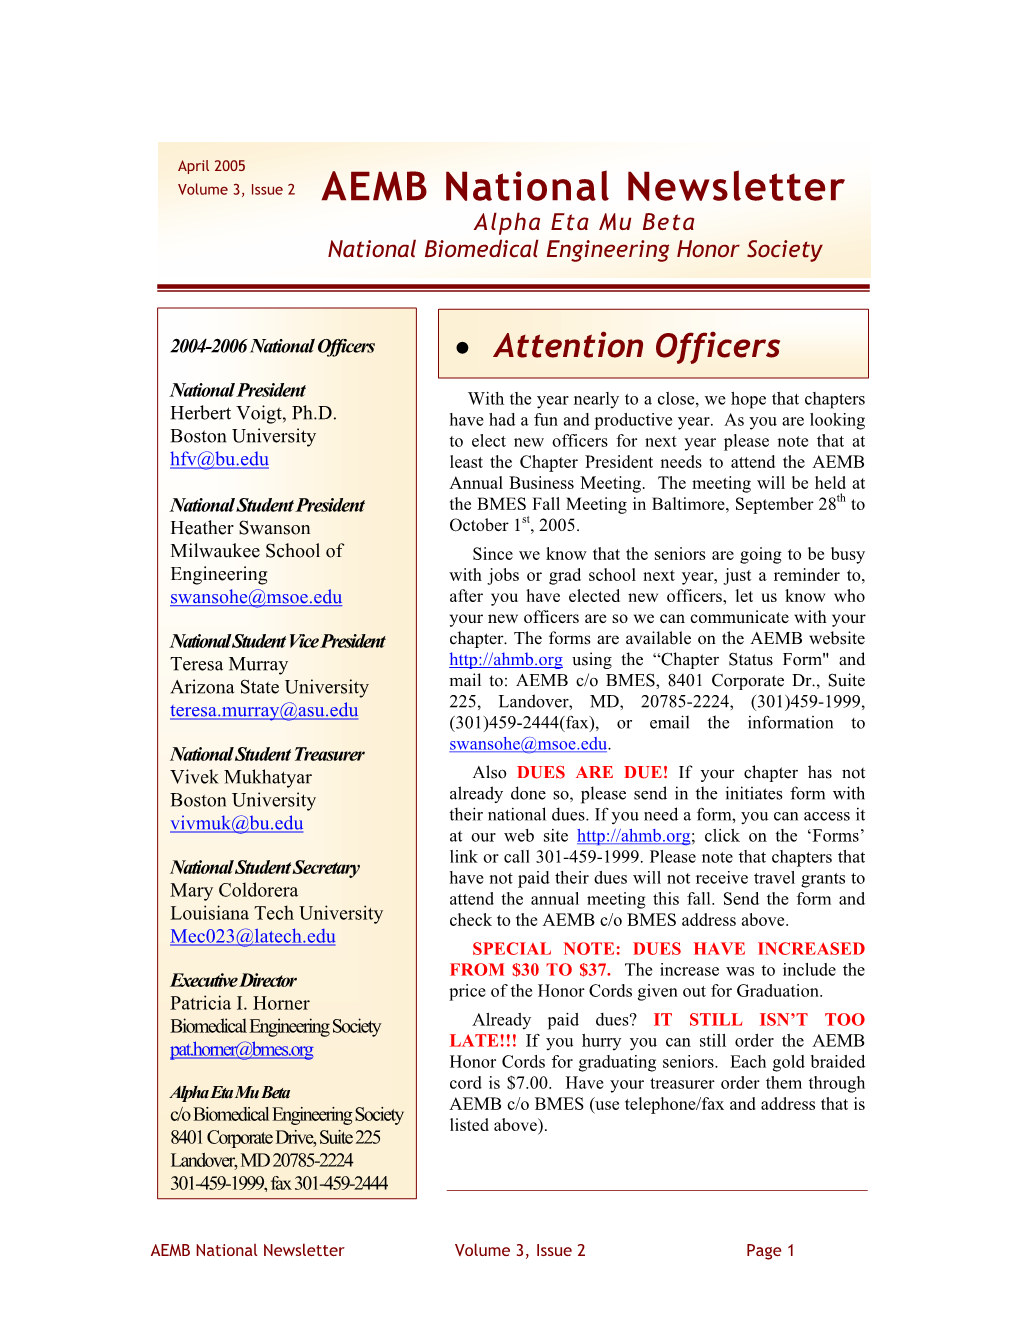 AEMB National Newsletter Alpha Eta Mu Beta National Biomedical Engineering Honor Society